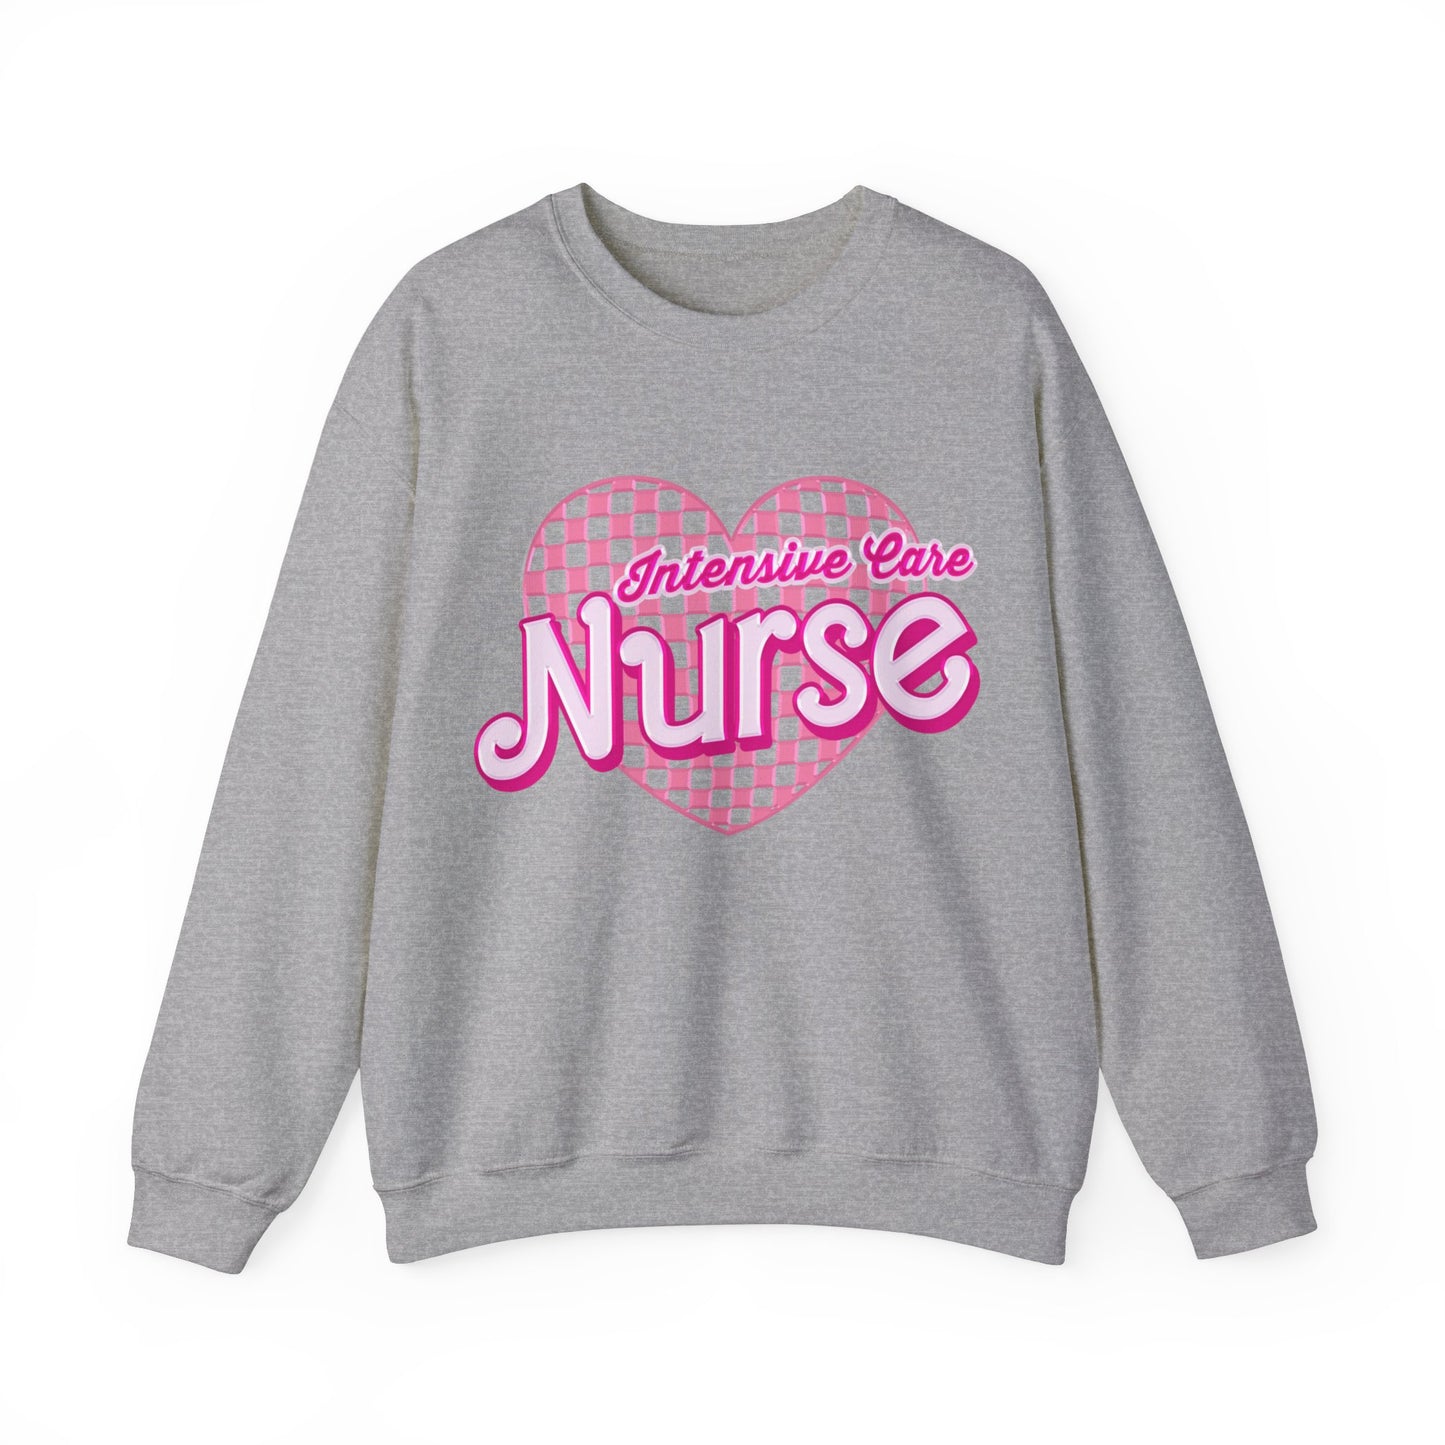 Boho ICU Nurse Sweatshirt, Intensive Care Nurse, Gift For Nurses, Nursing Student, Clinicals Sweatshirt, ICU Nurse, Unisex Sweatshirt, S1498